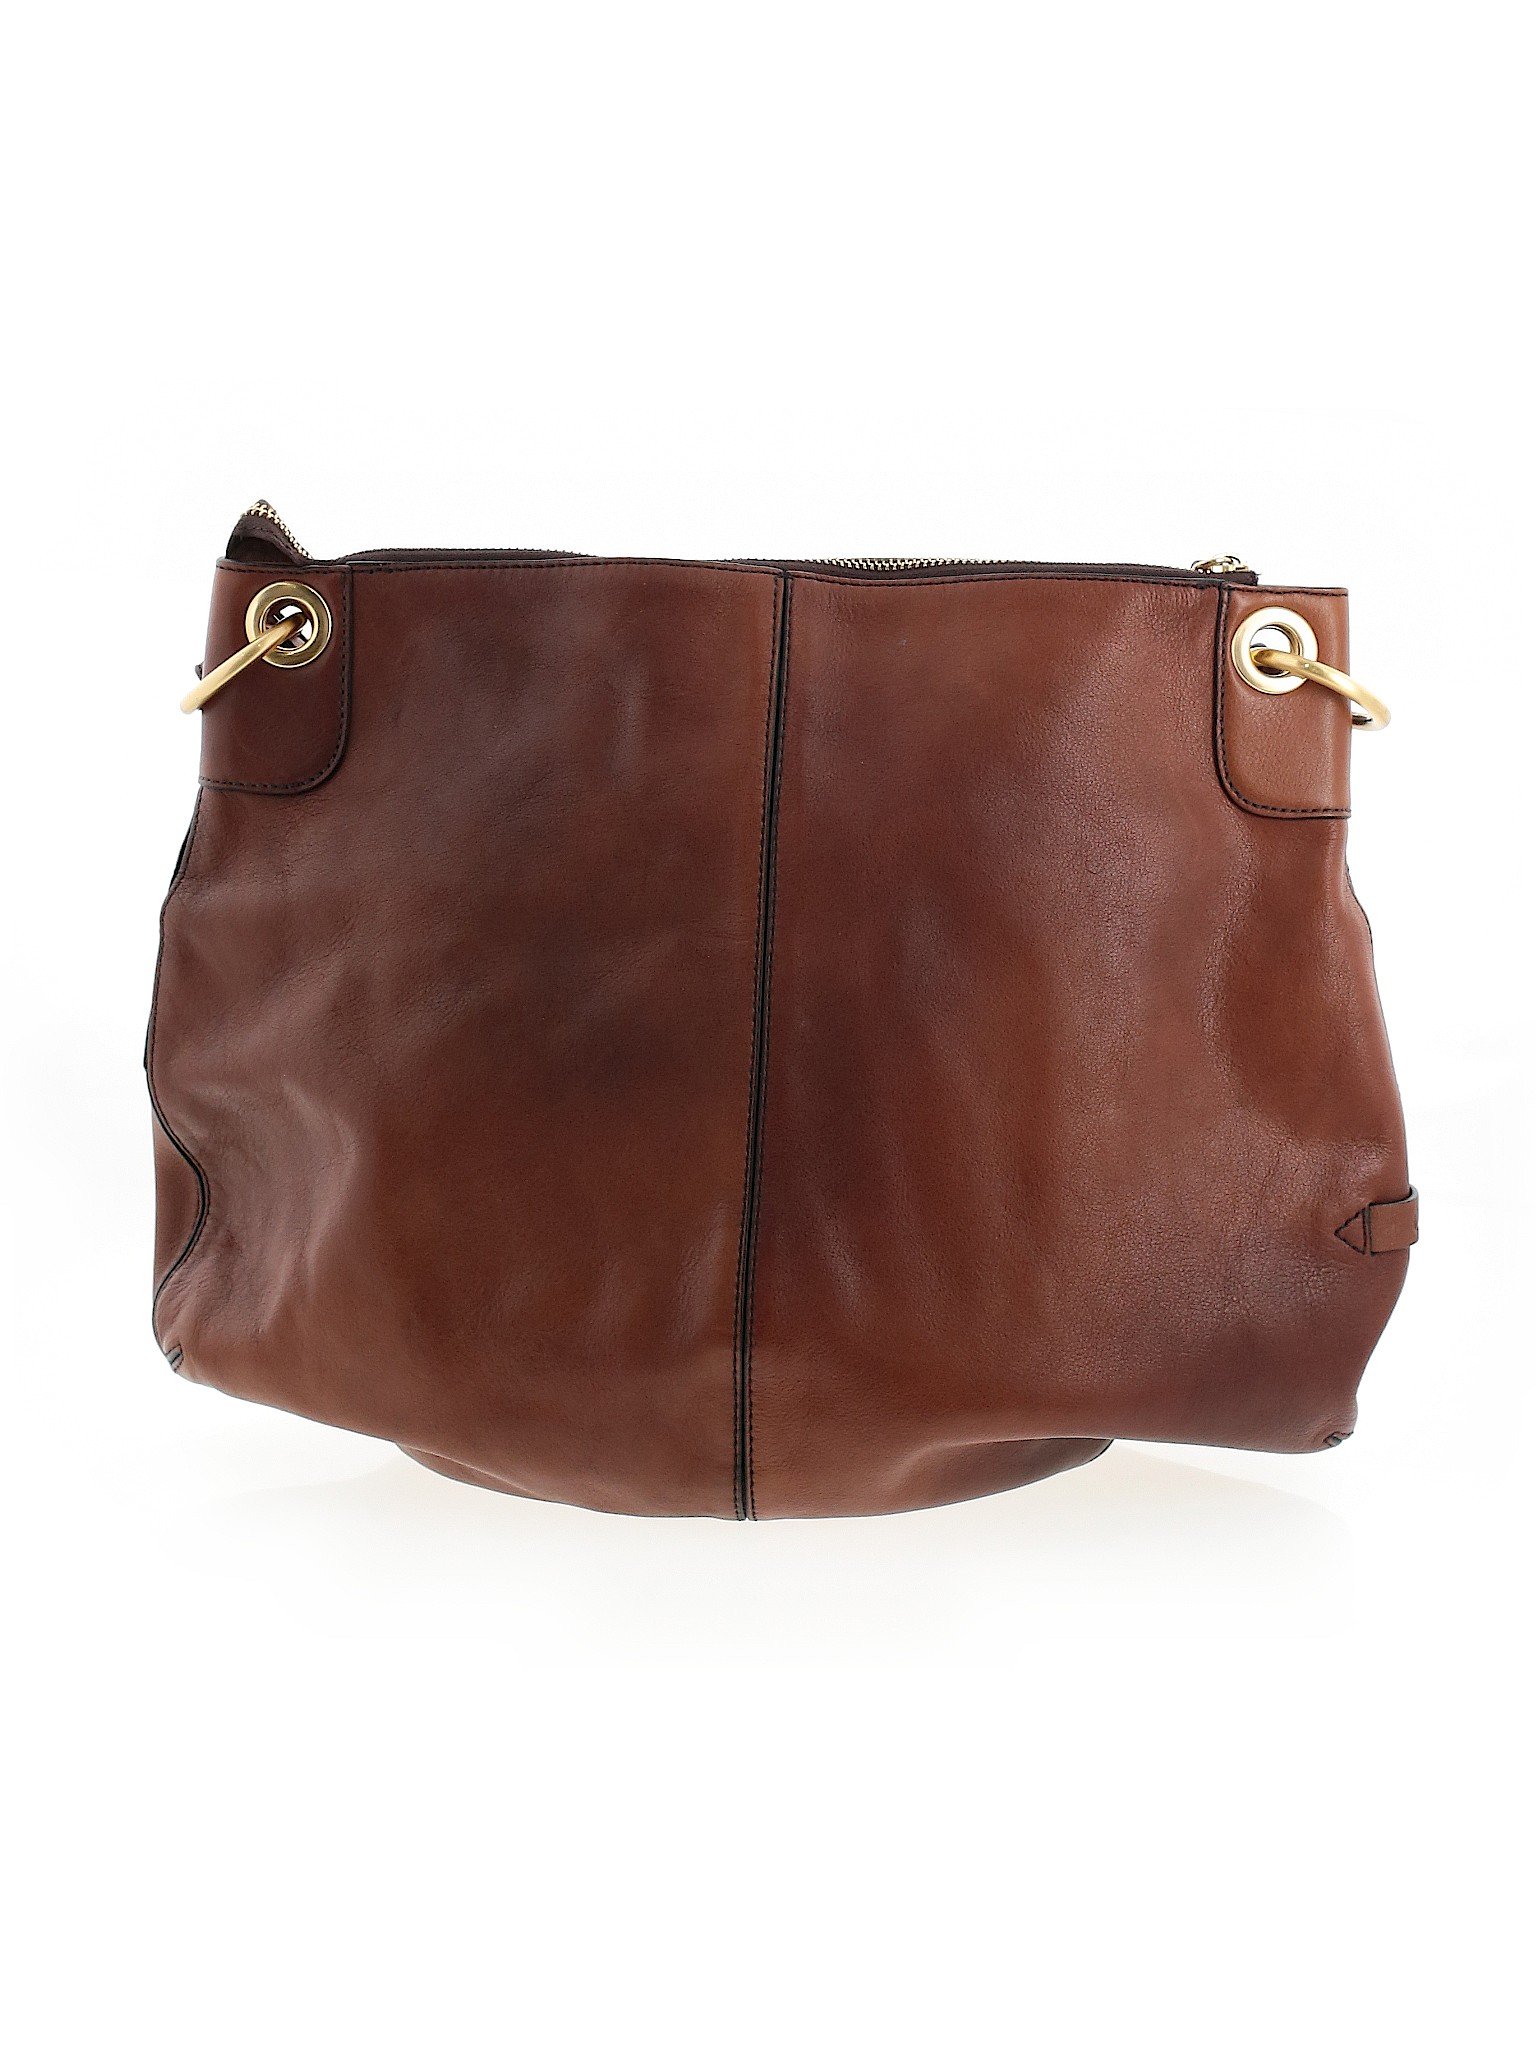 Cole Haan Women Brown Leather Shoulder Bag One Size | eBay